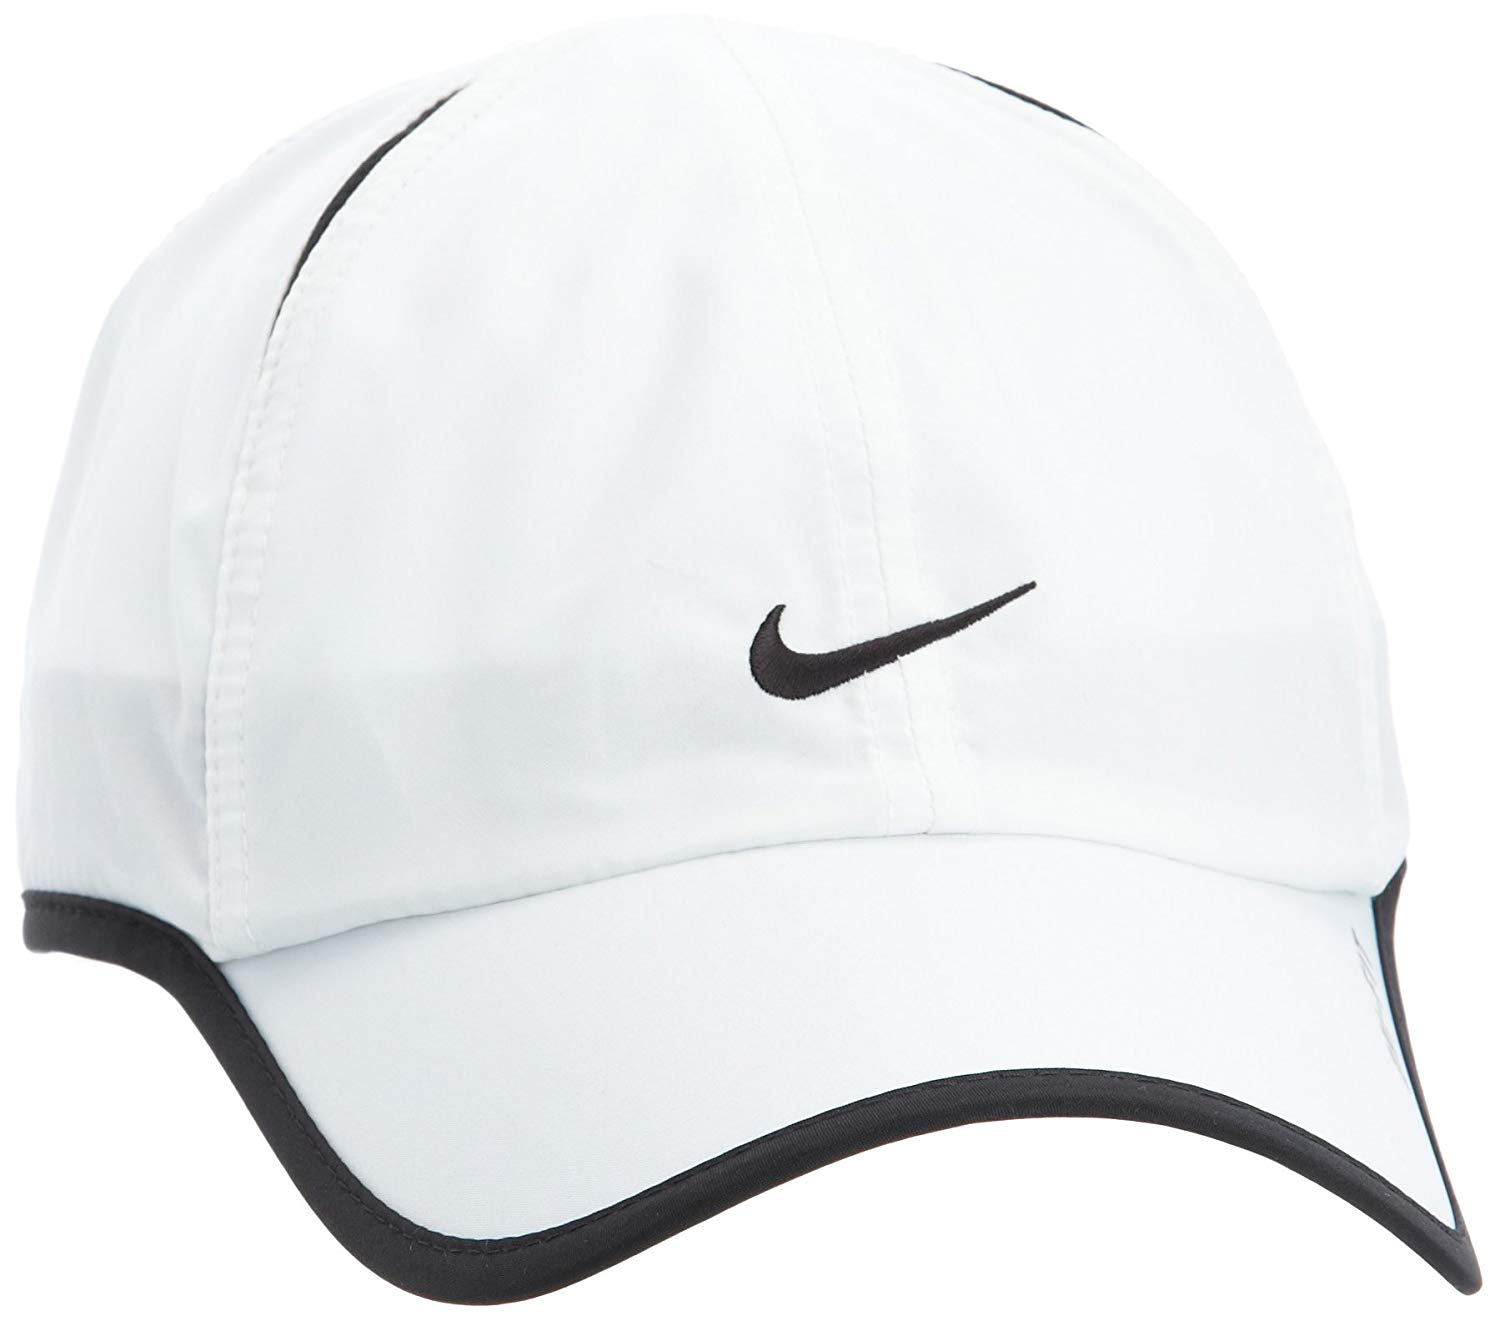 Nike Men's Caps - Black